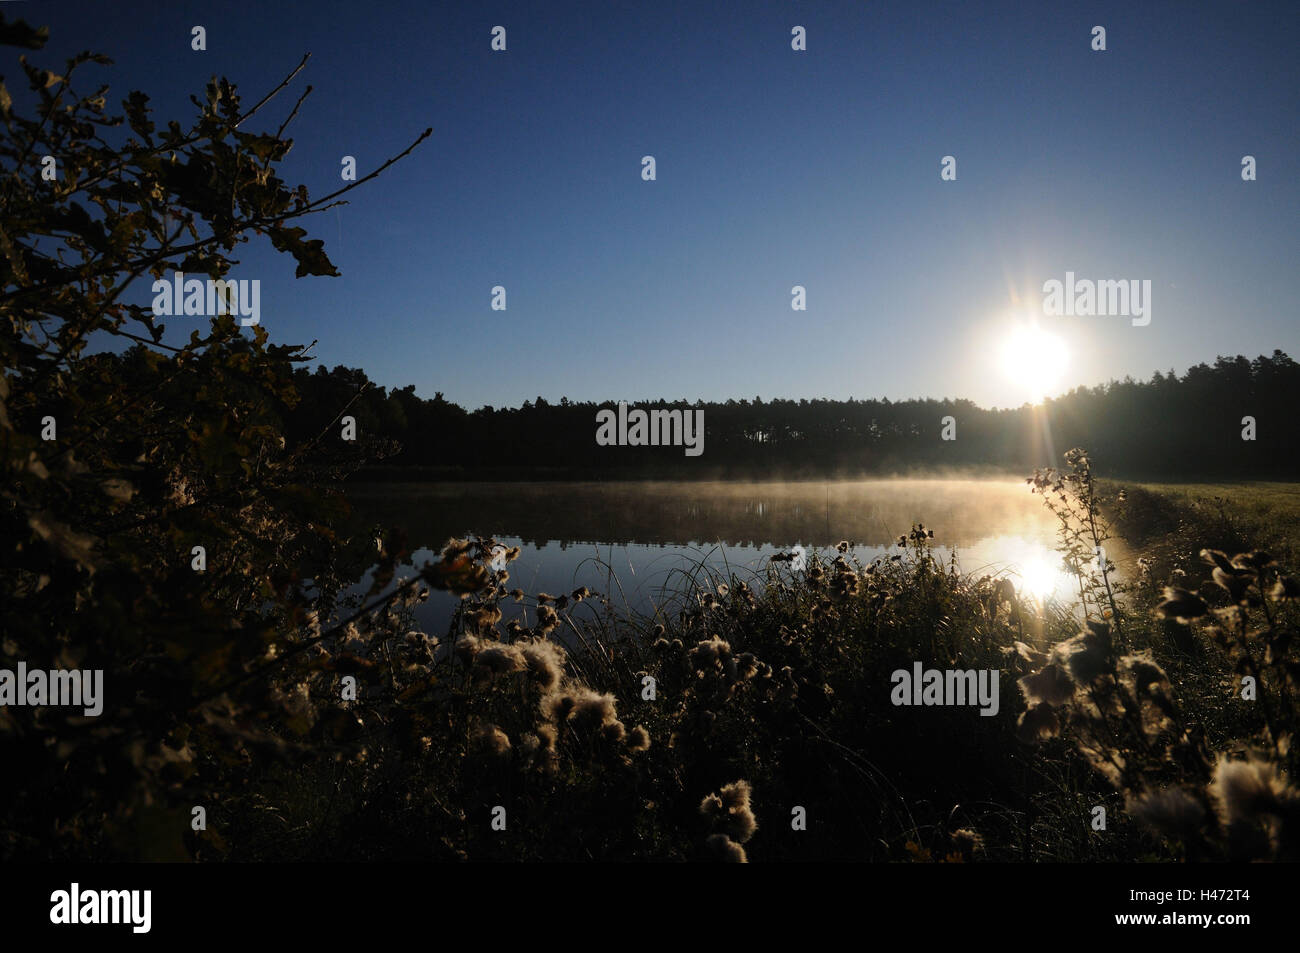 Sea scenery, sunrise, autumn, morning mood, Stock Photo